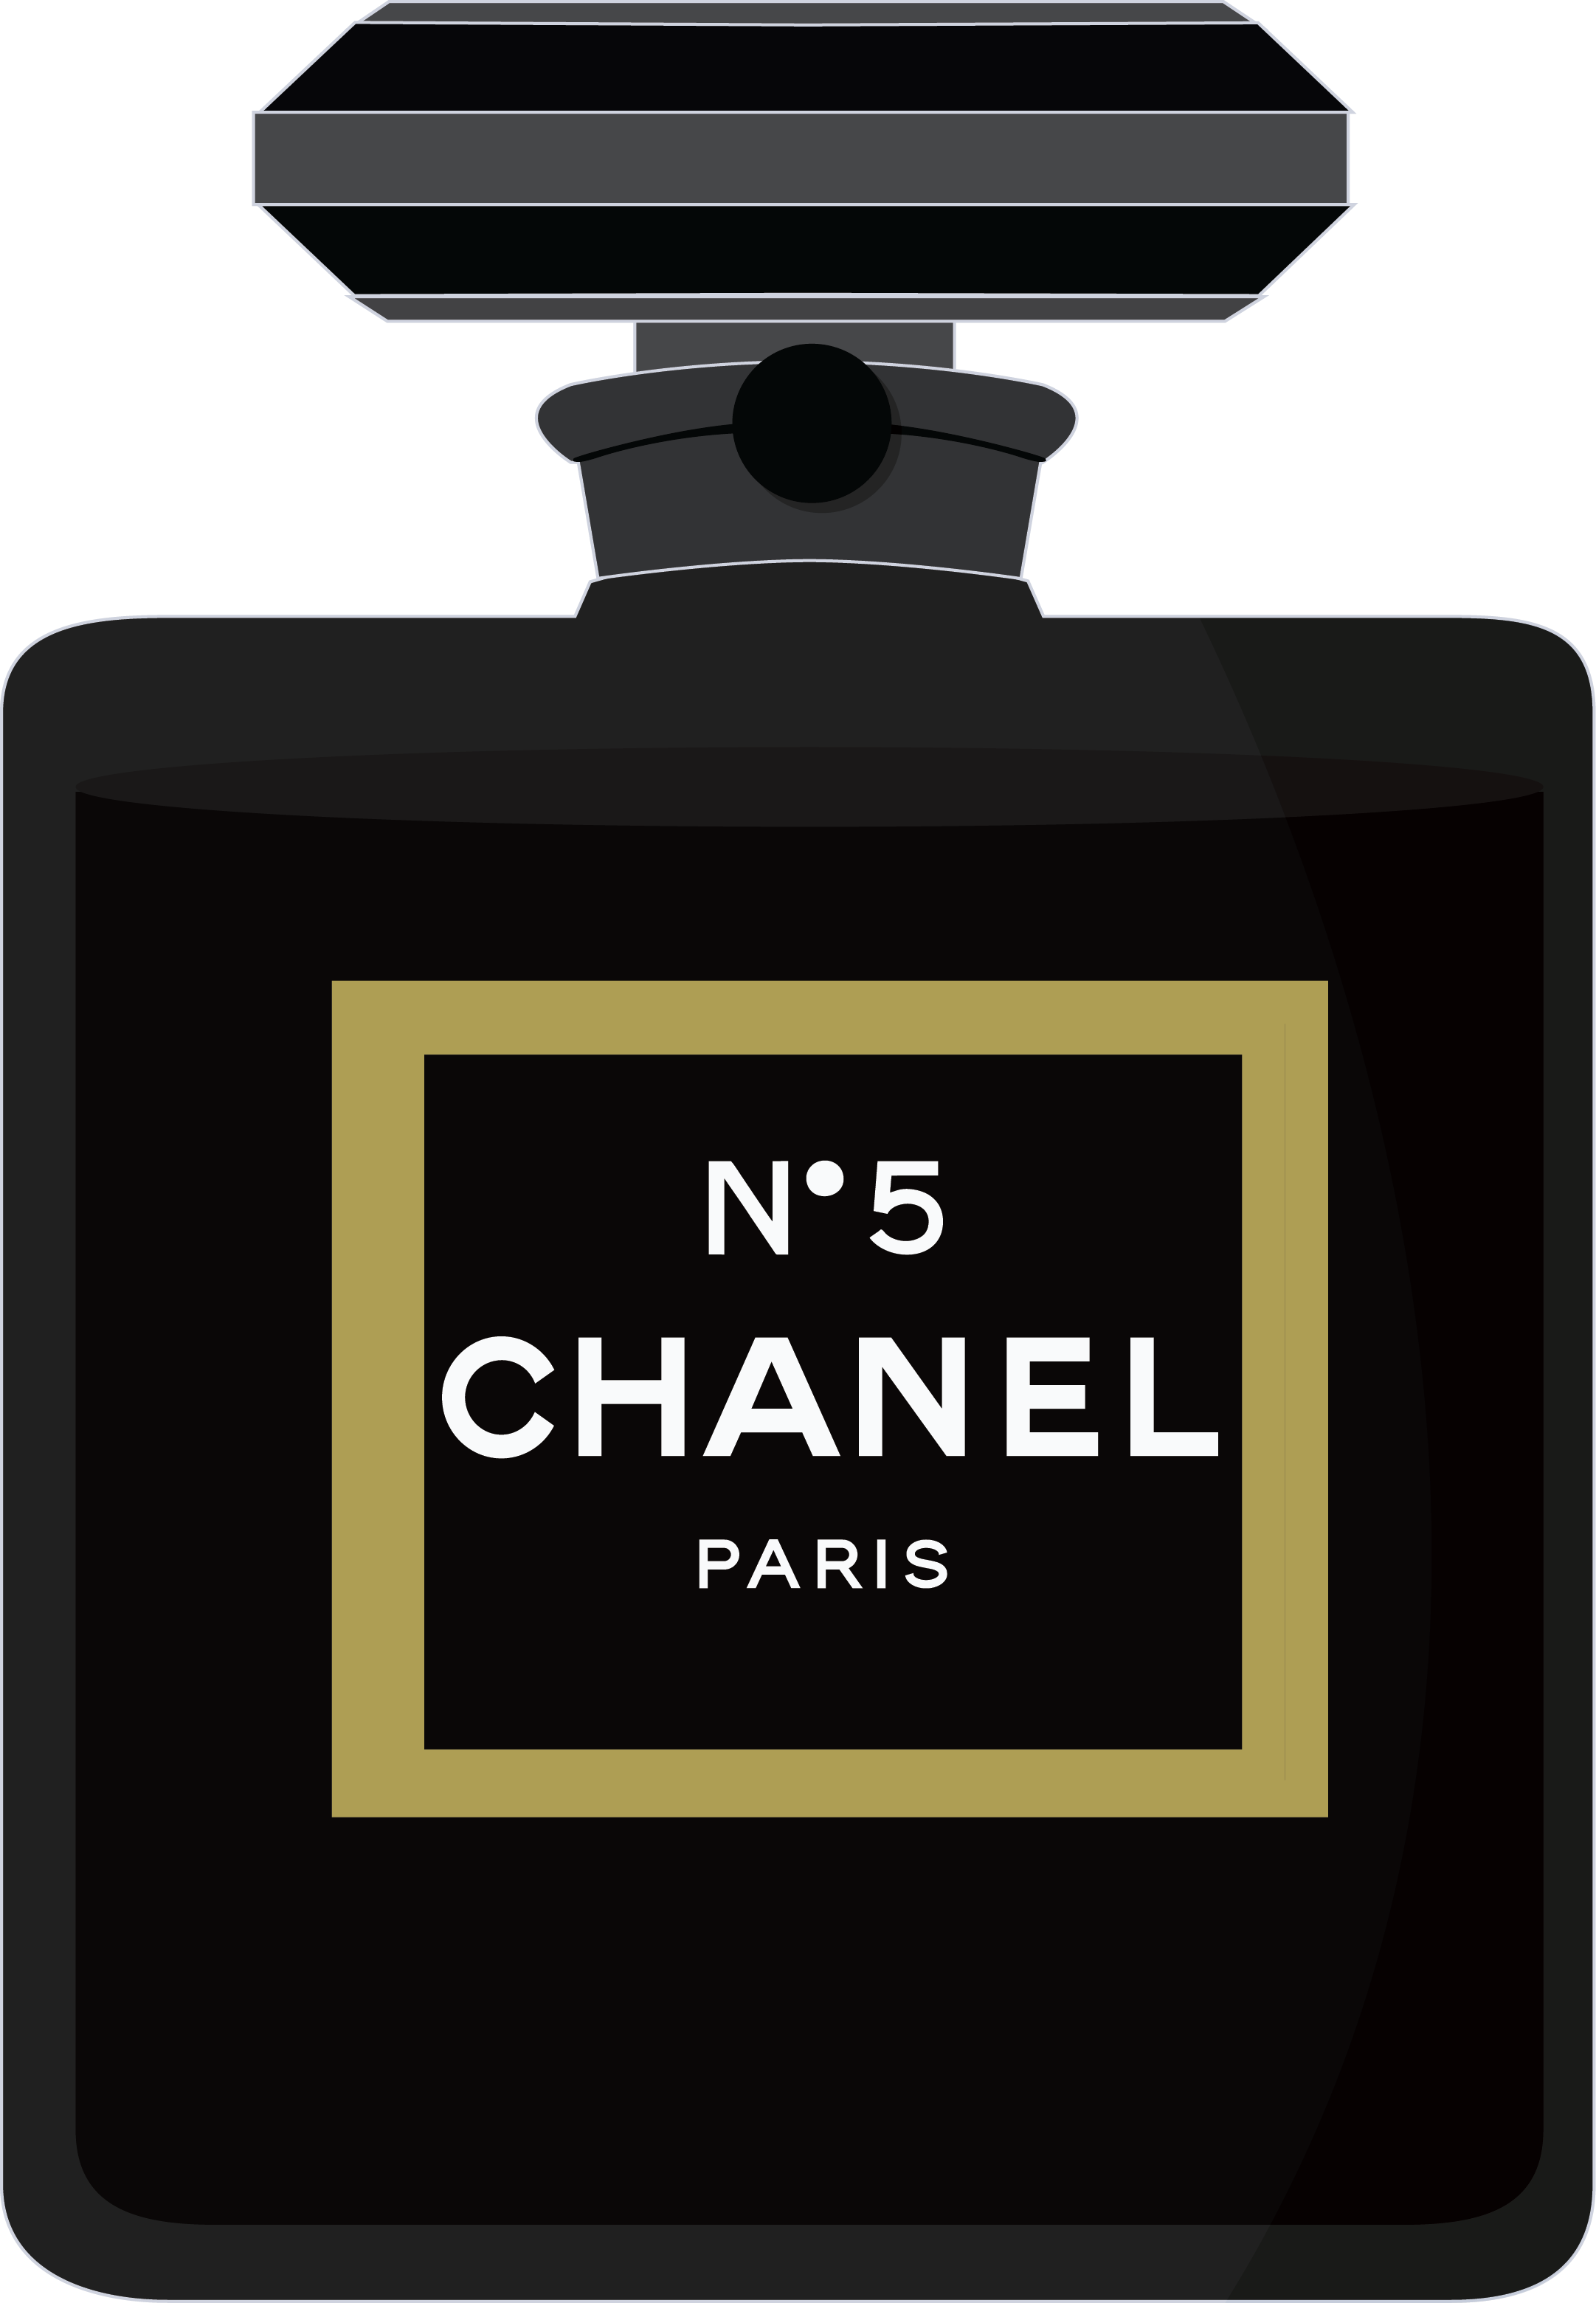 No. Fashion Chanel Designer Perfume Free Photo PNG Clipart